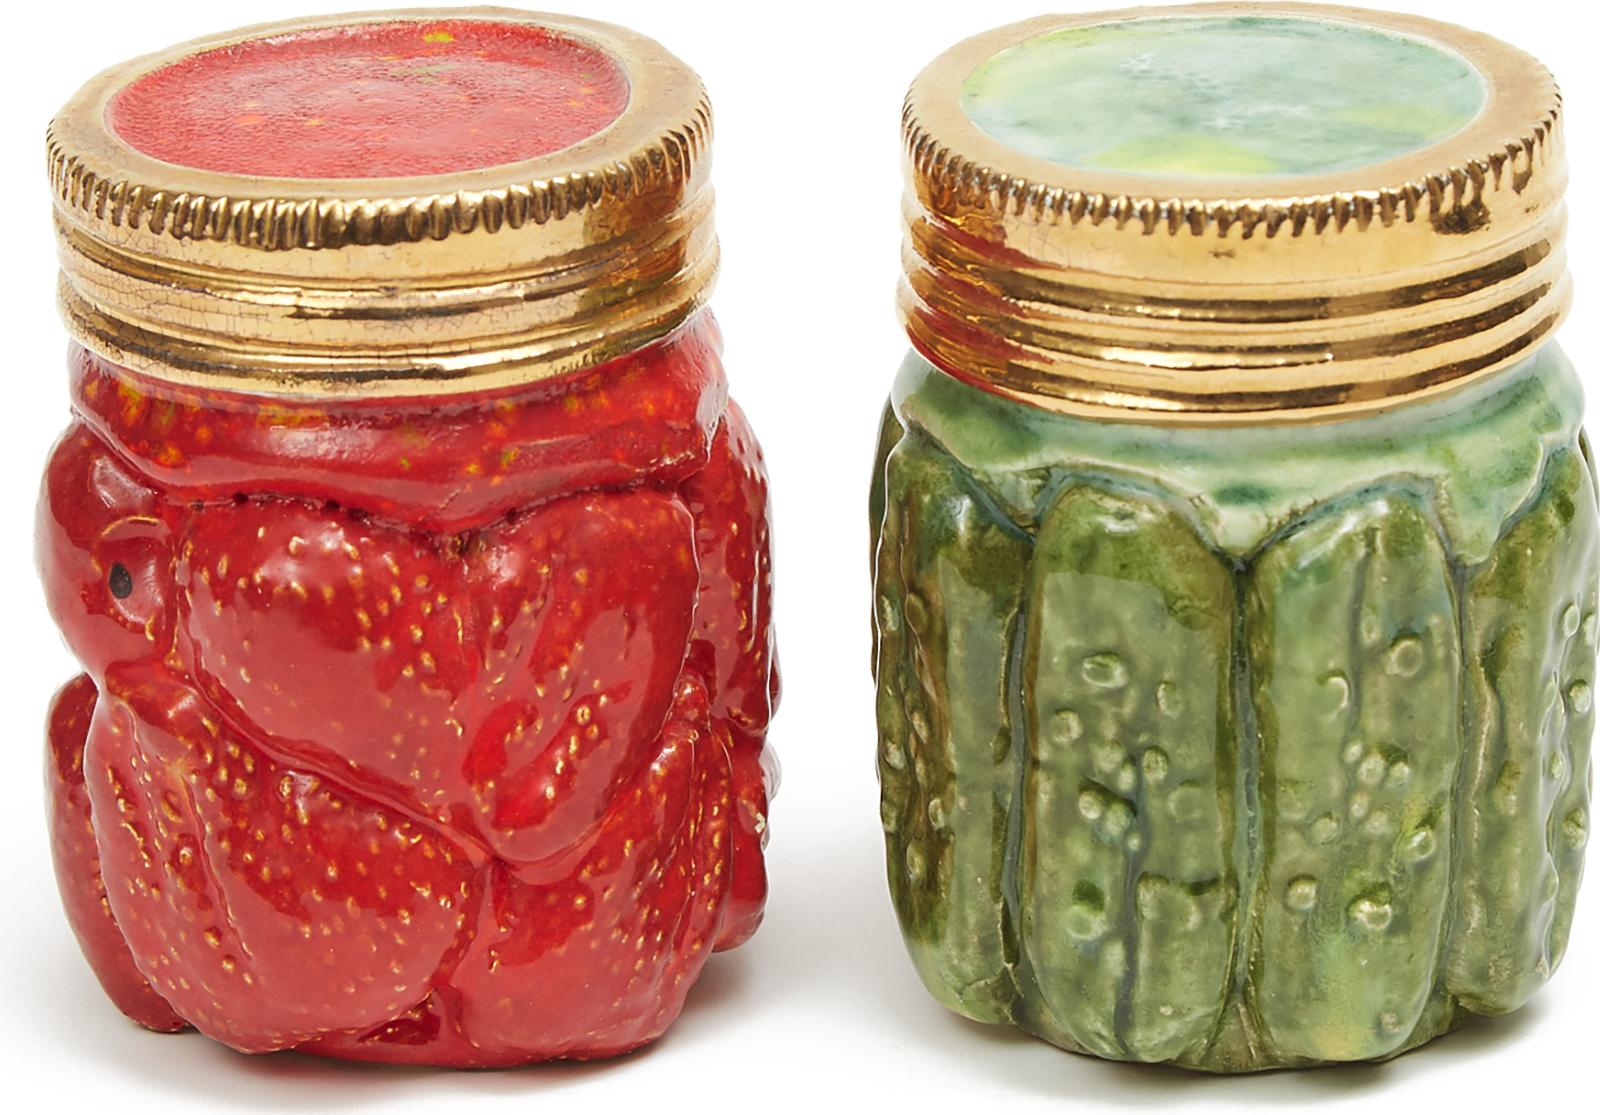 Victor Cicansky (1935) - Strawberry Jar, Pickle Jar, 1987